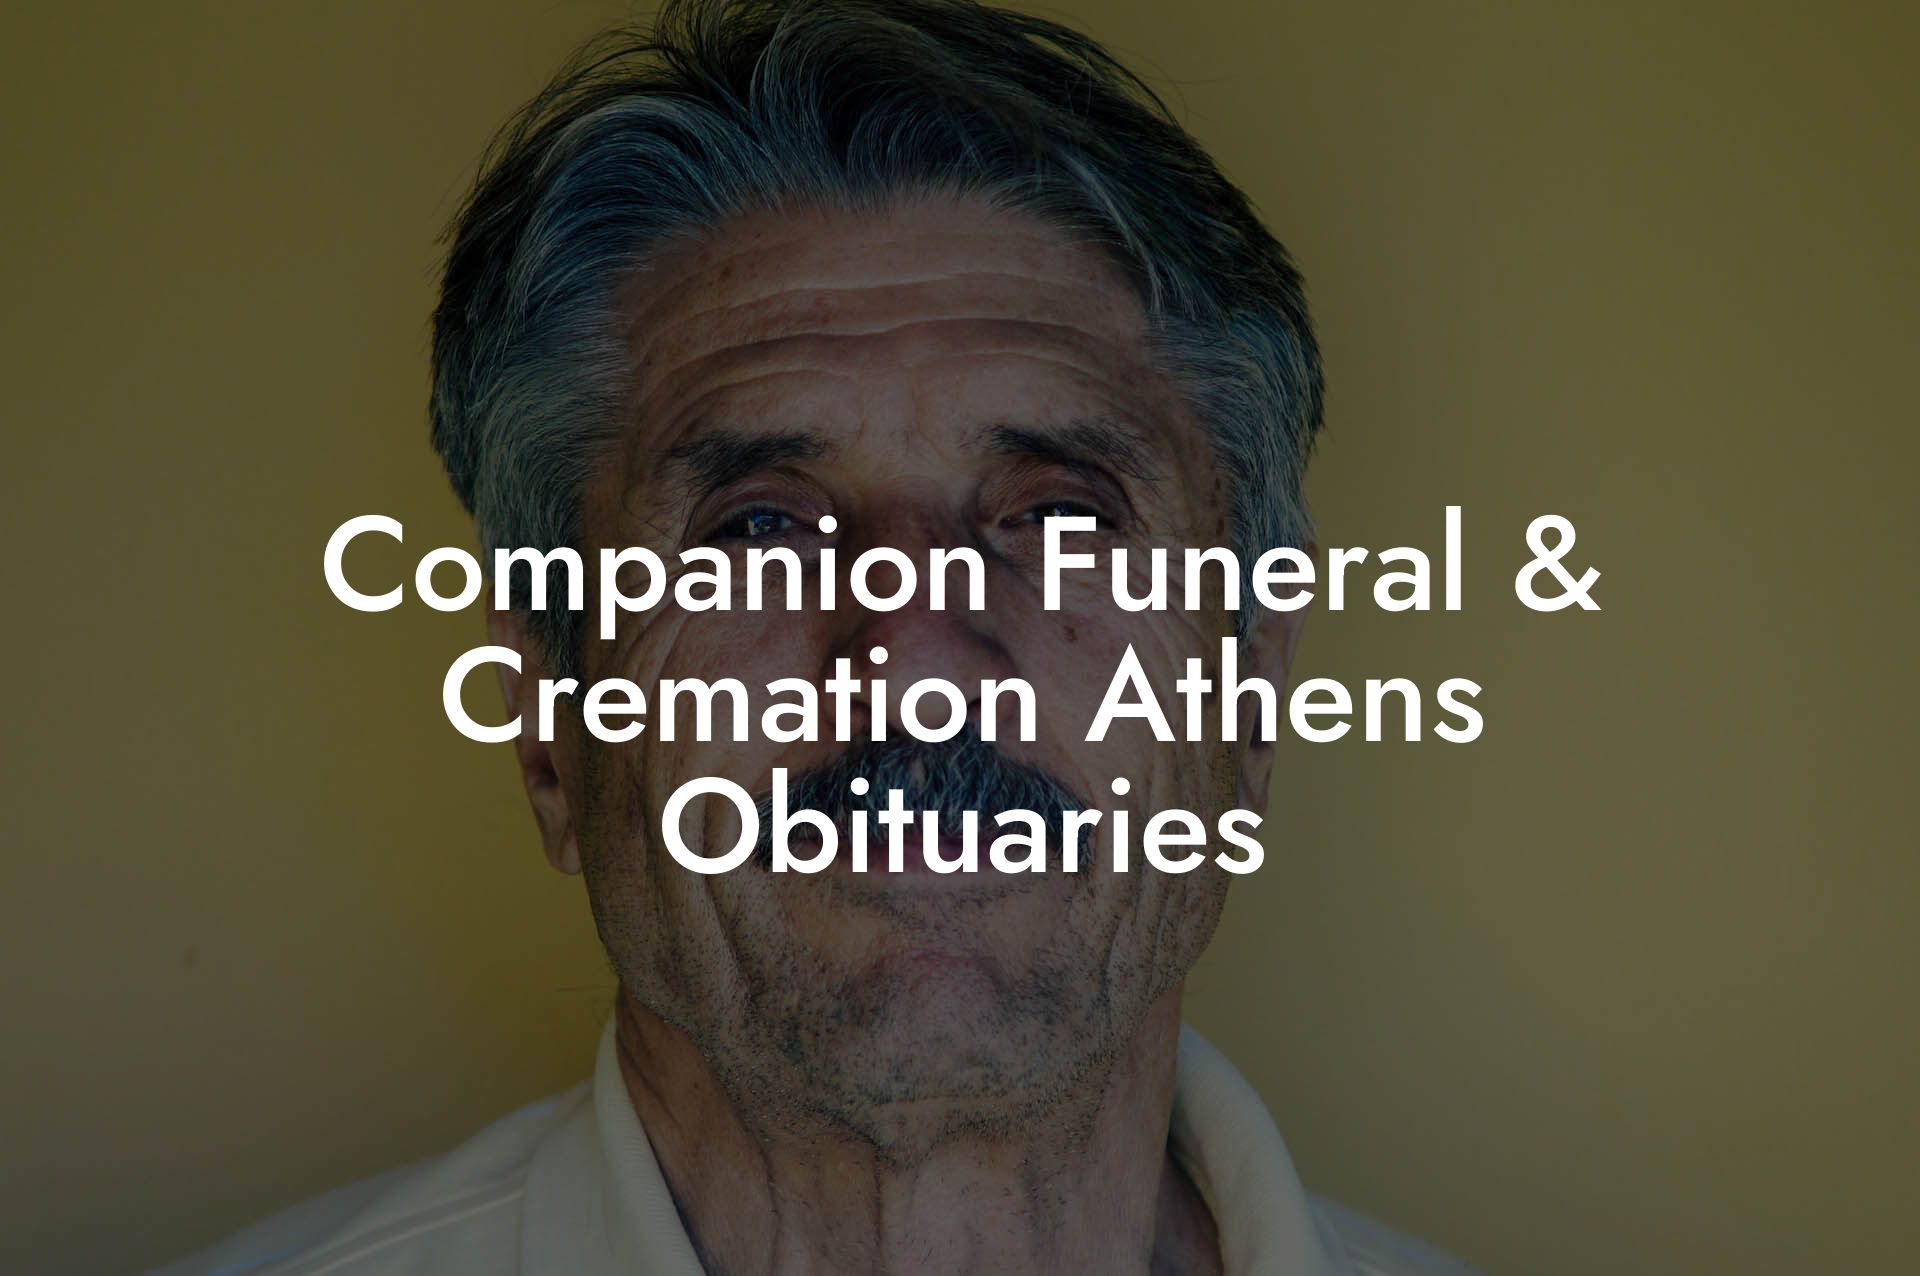 Companion Funeral & Cremation Athens Obituaries